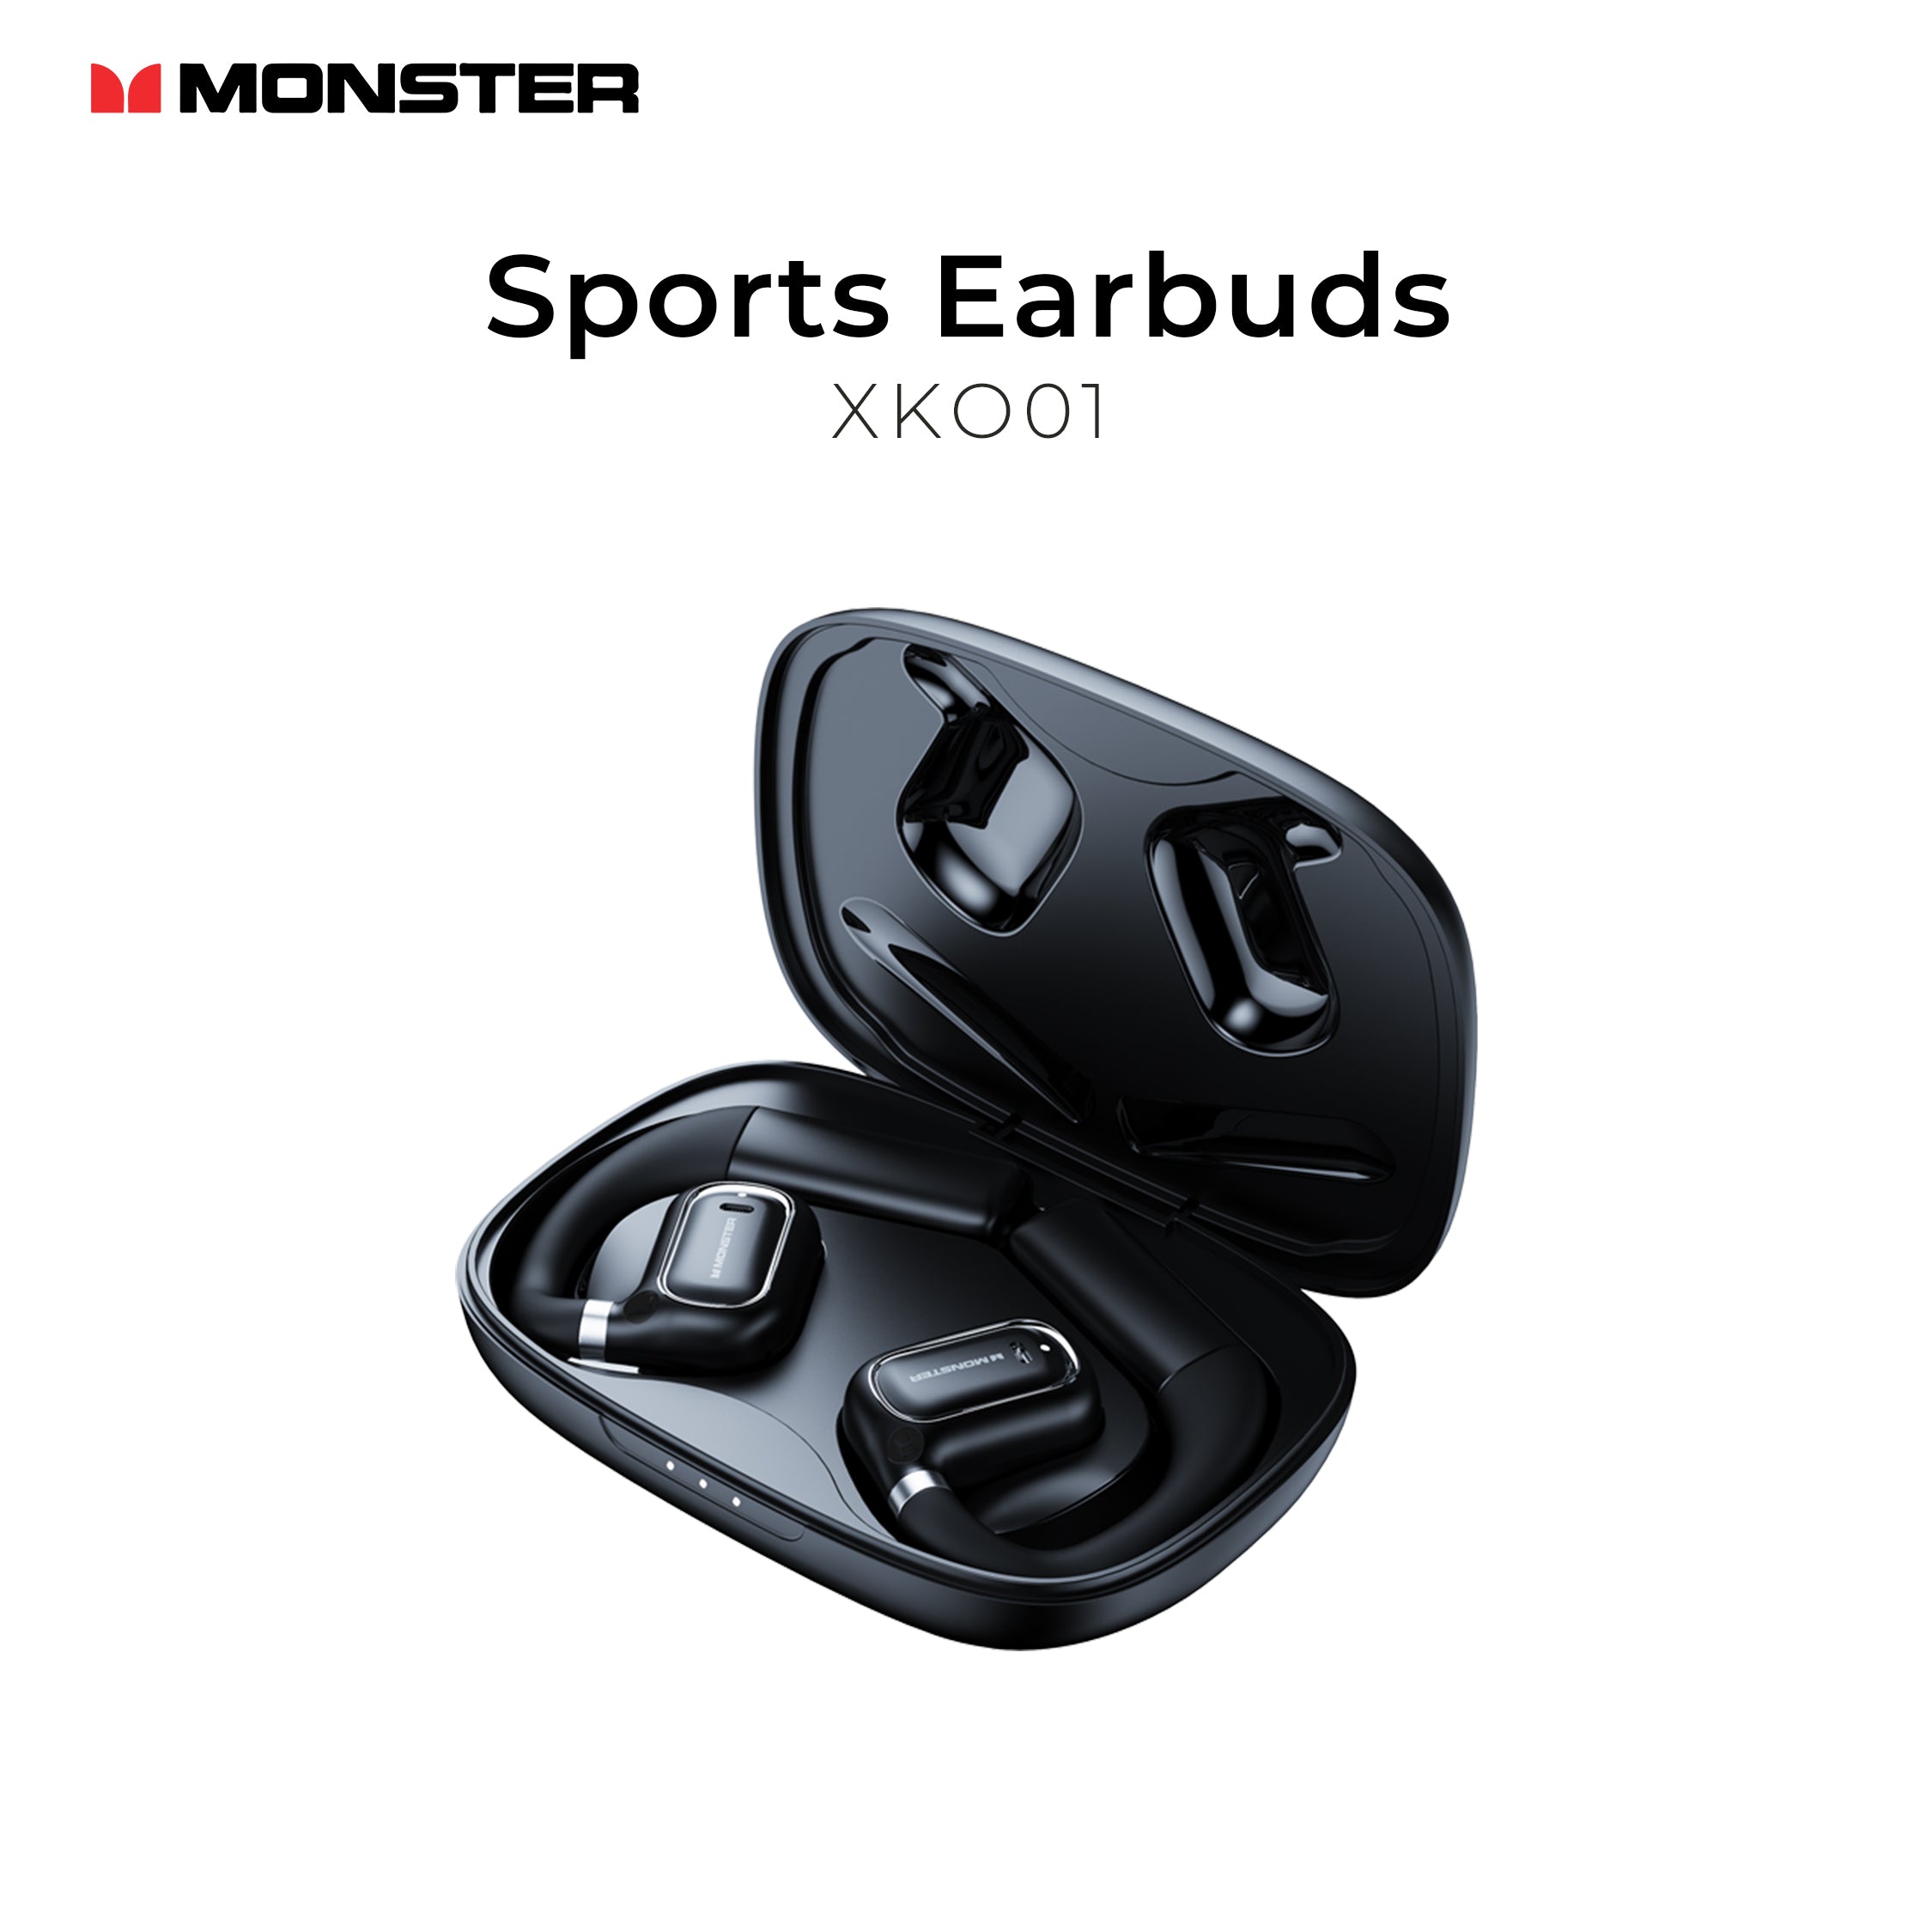 Monster Sports Earbuds XKO01